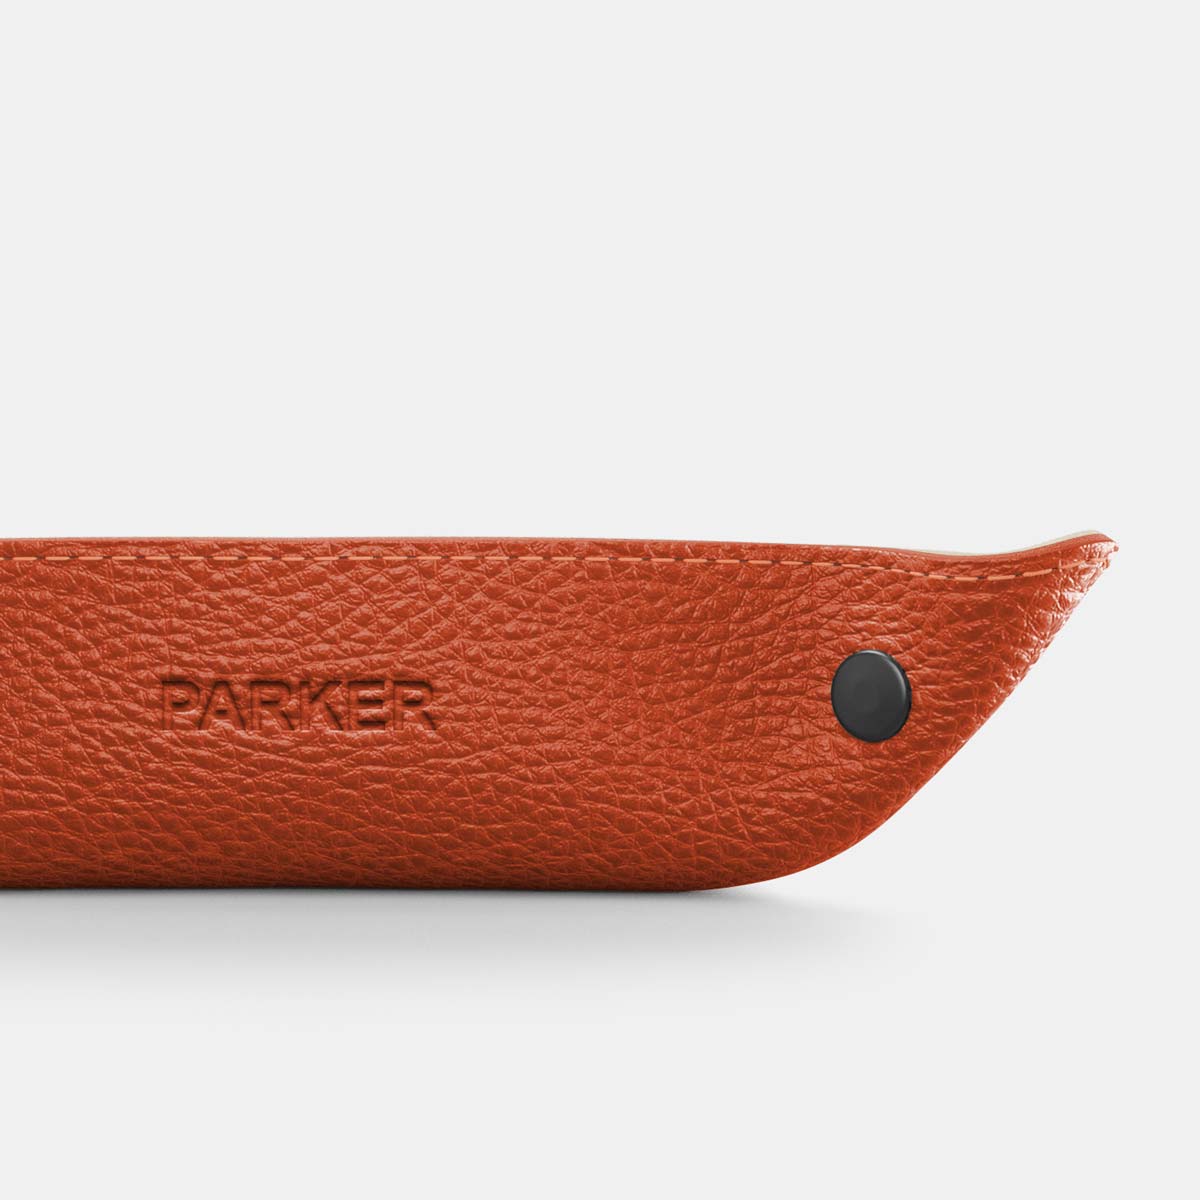 Leather Pencil Case - Orange and Beige - RYAN London